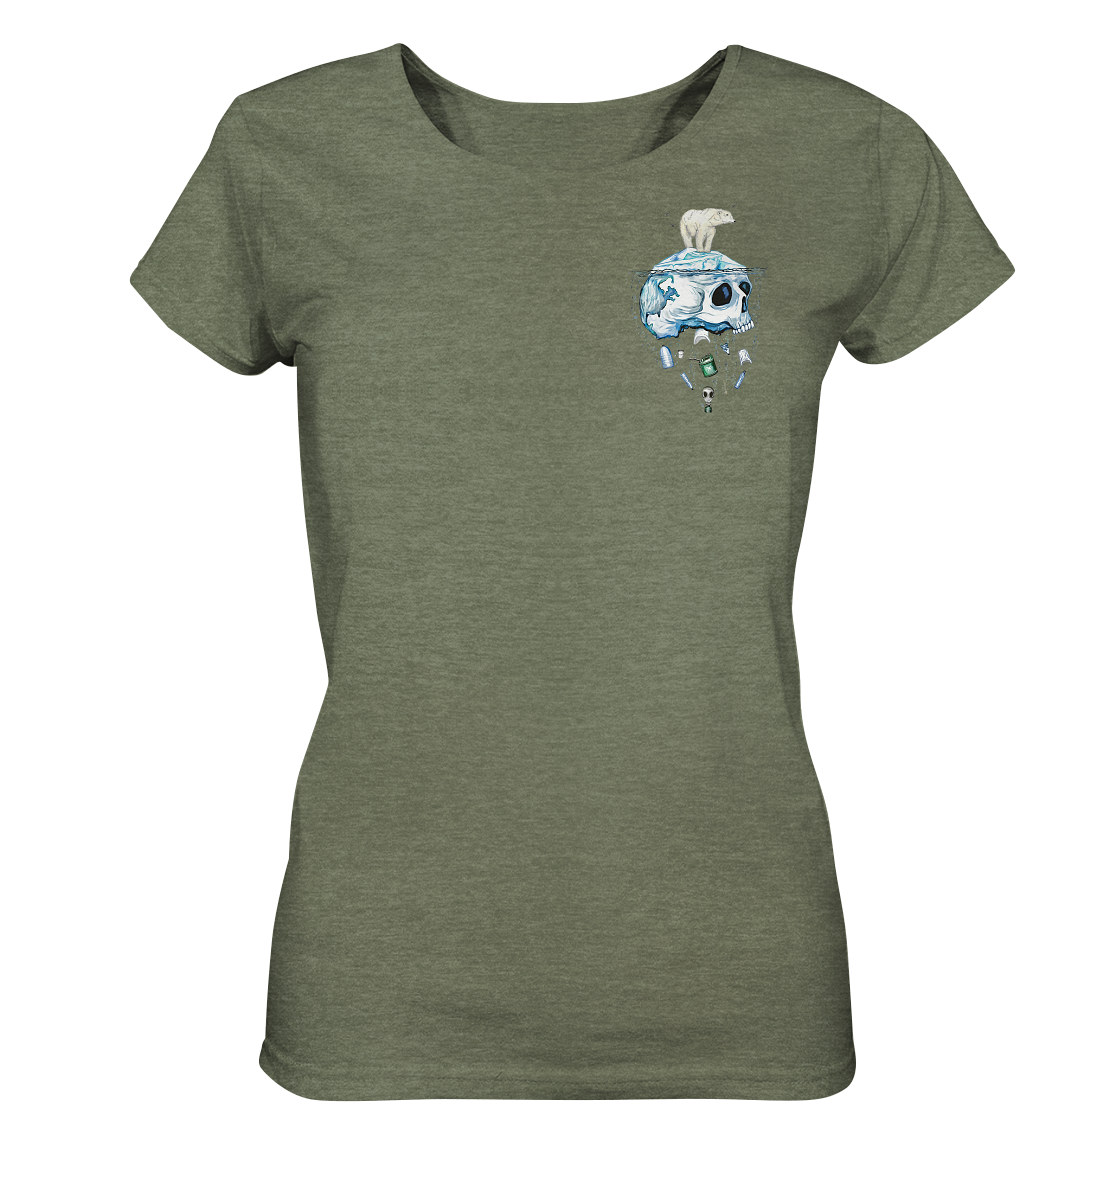 front-ladies-organic-shirt-meliert-616b52-1116x-2.png